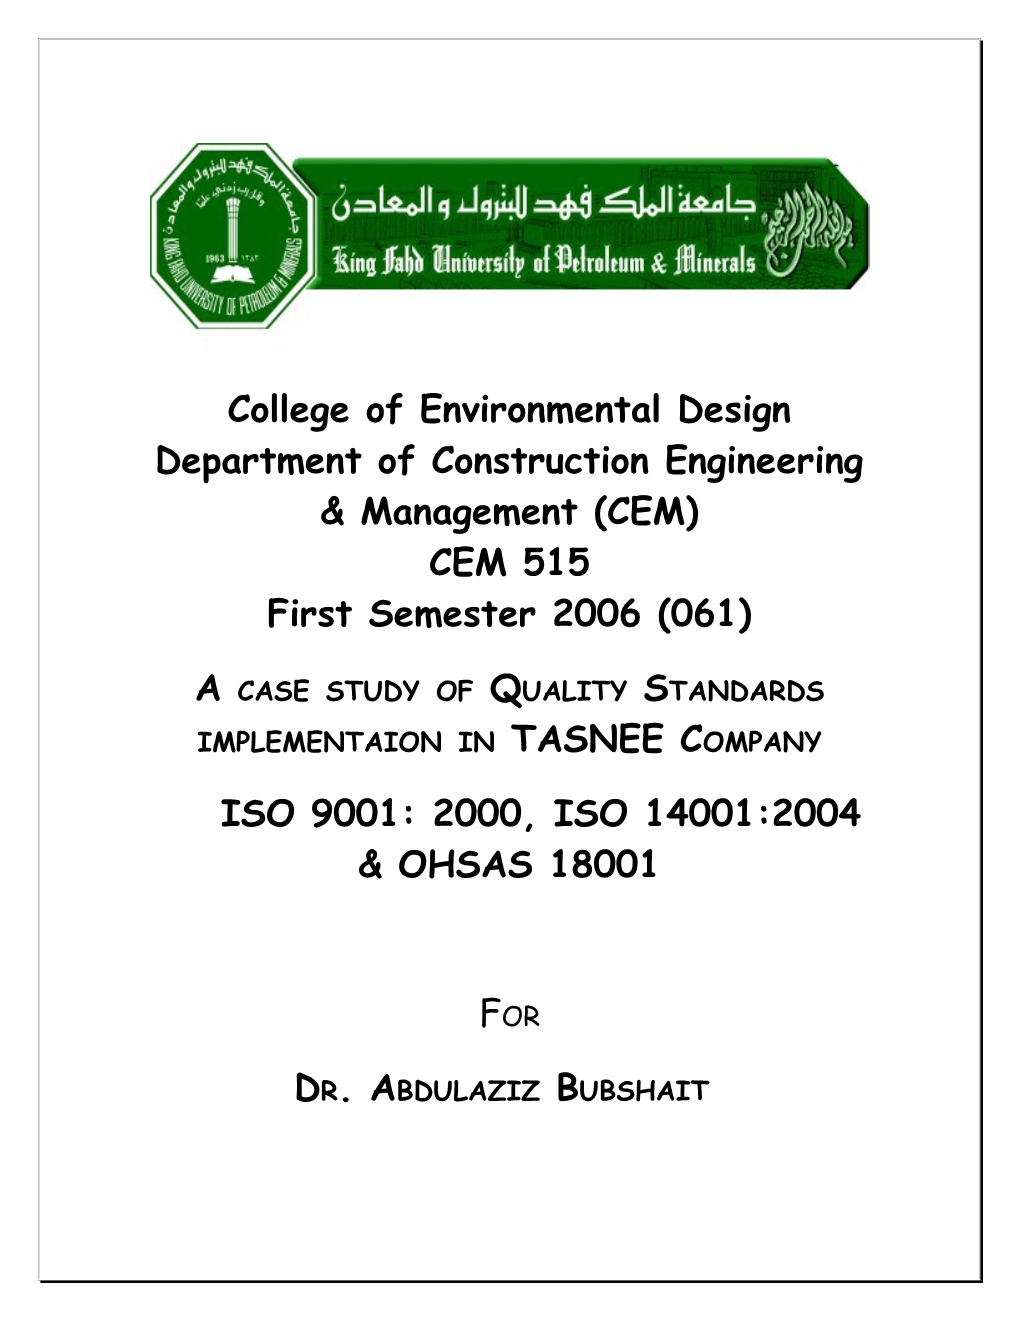 Department of Construction Engineering & Management (CEM)